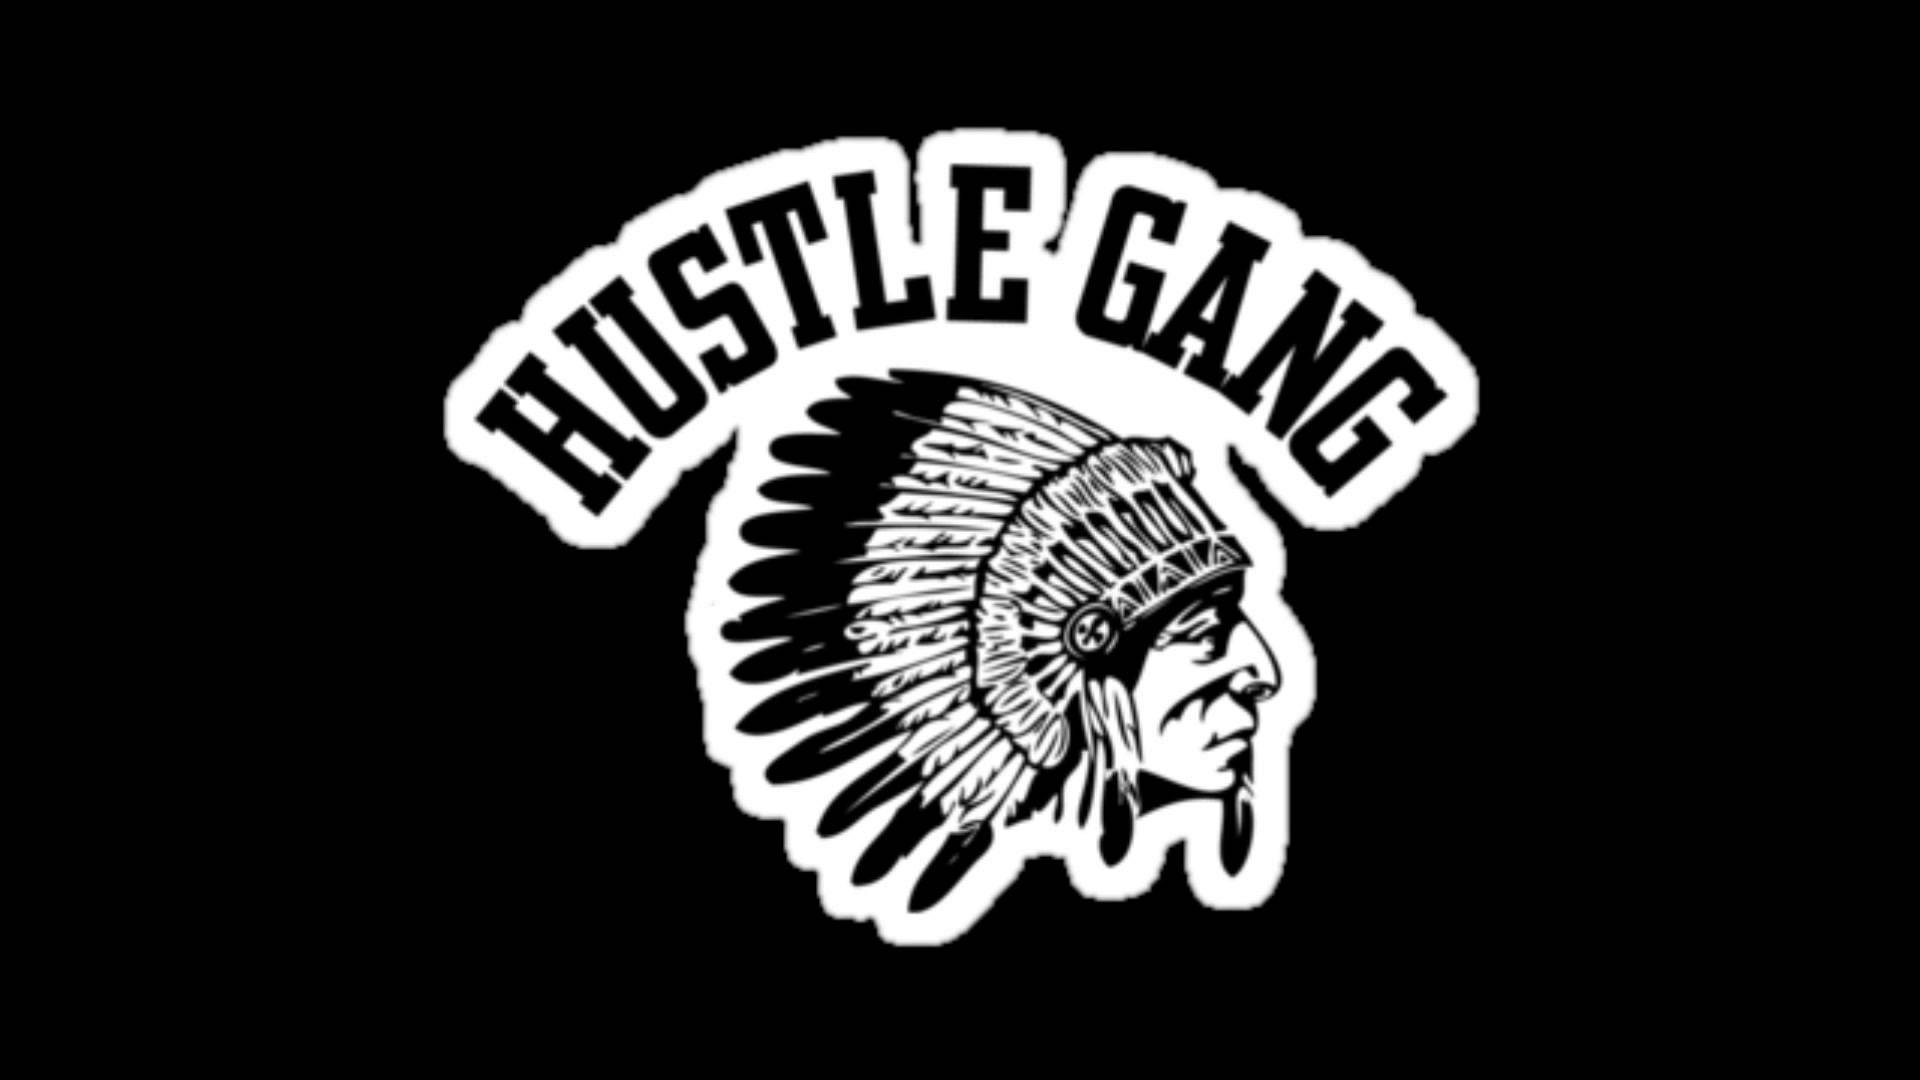 Hustle Gang ft TI BoBSpodee Chosen Lyrics Mp3 Download